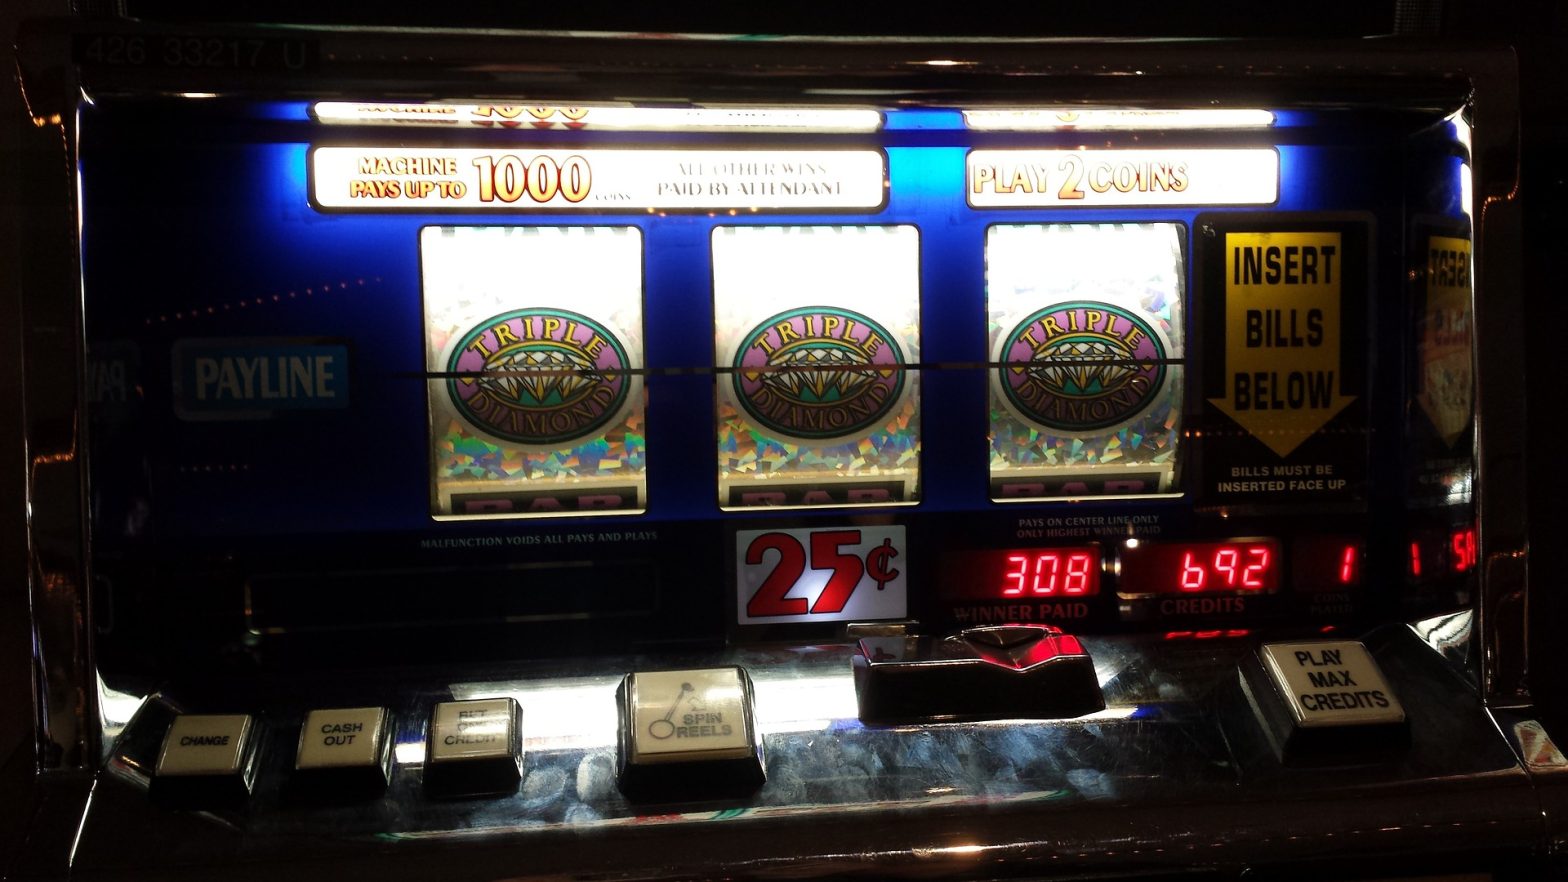 How to win at casino slot machines?